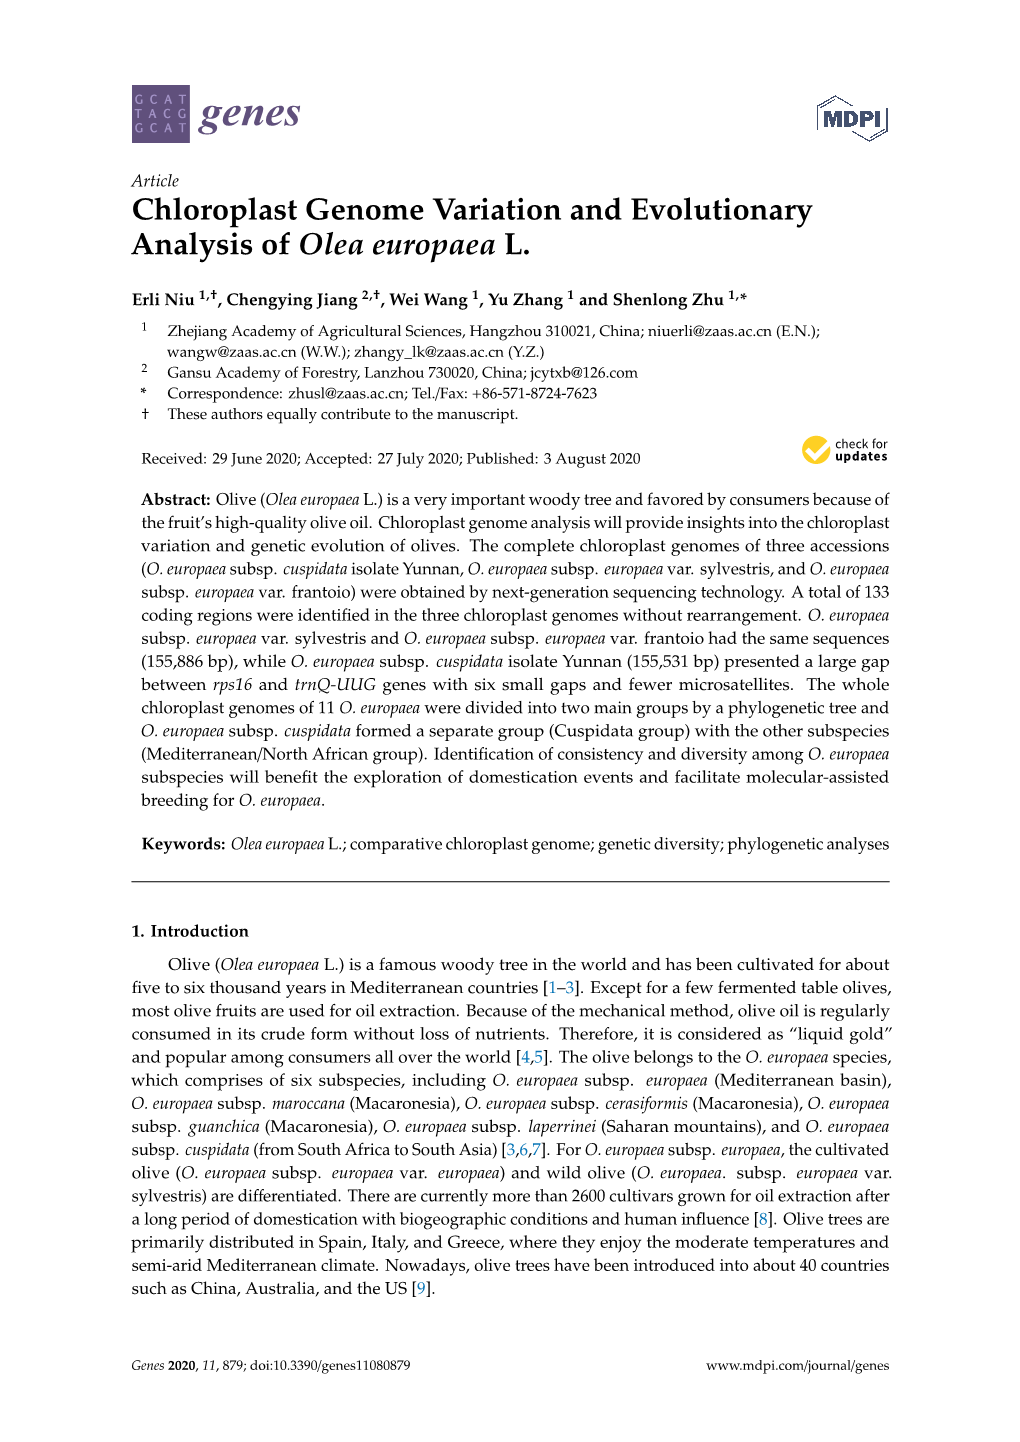 Chloroplast Genome Variation and Evolutionary Analysis of Olea Europaea L